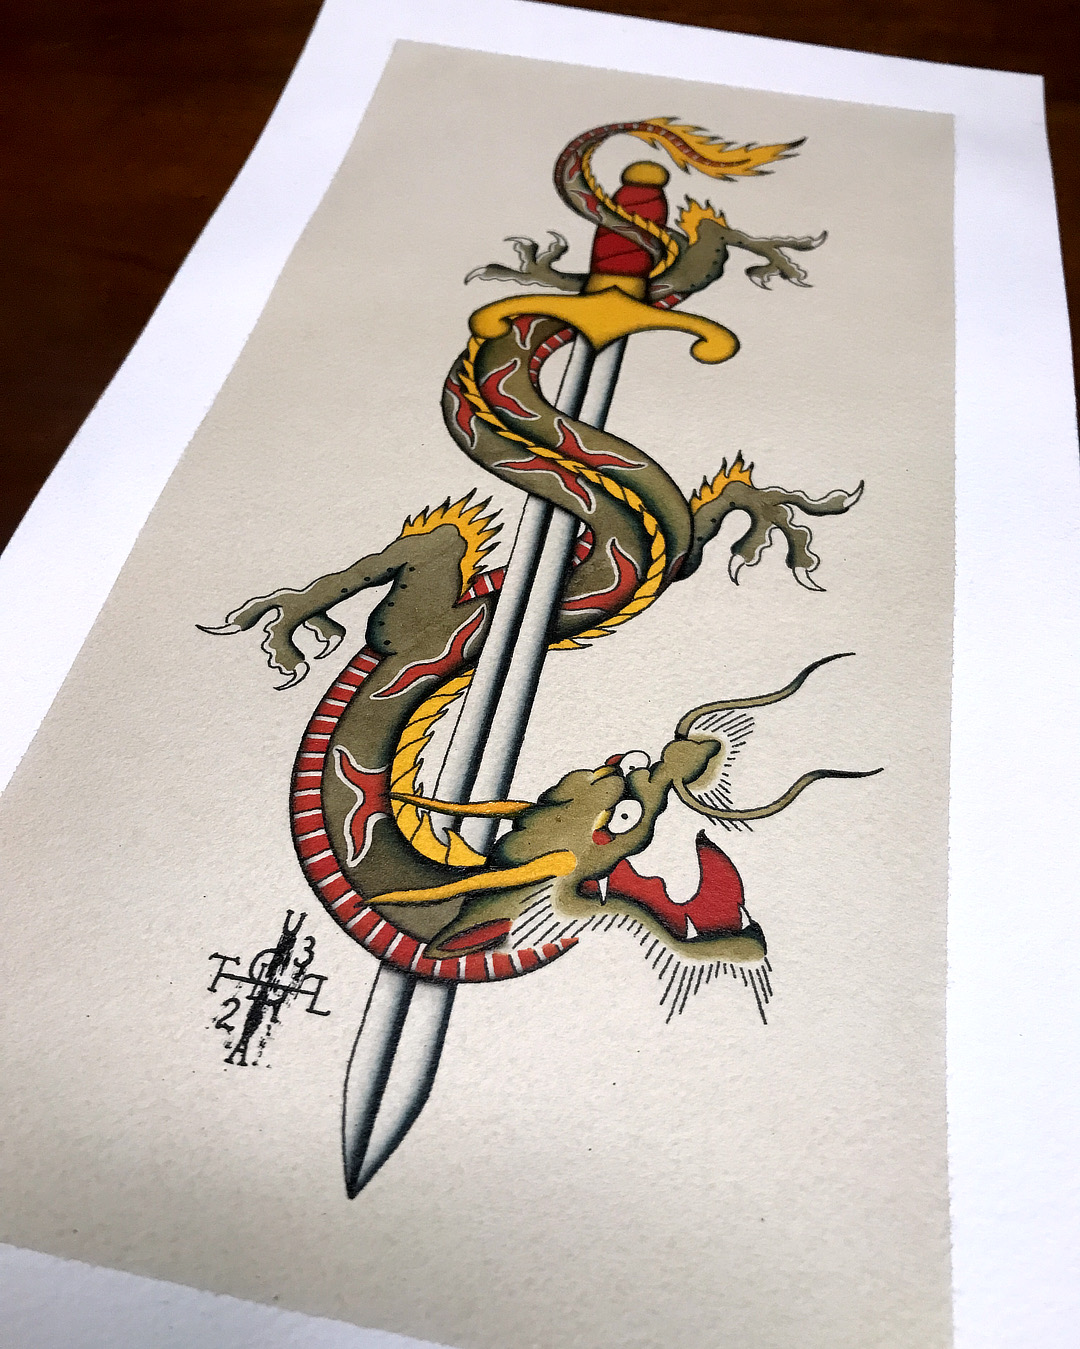 nicolas-trillaud-sword-dragon-george-burchett-traditional-tattoo-tatouage-traditionnel-flash-oldschool-classic-tattooing-bordeaux-gironde-france